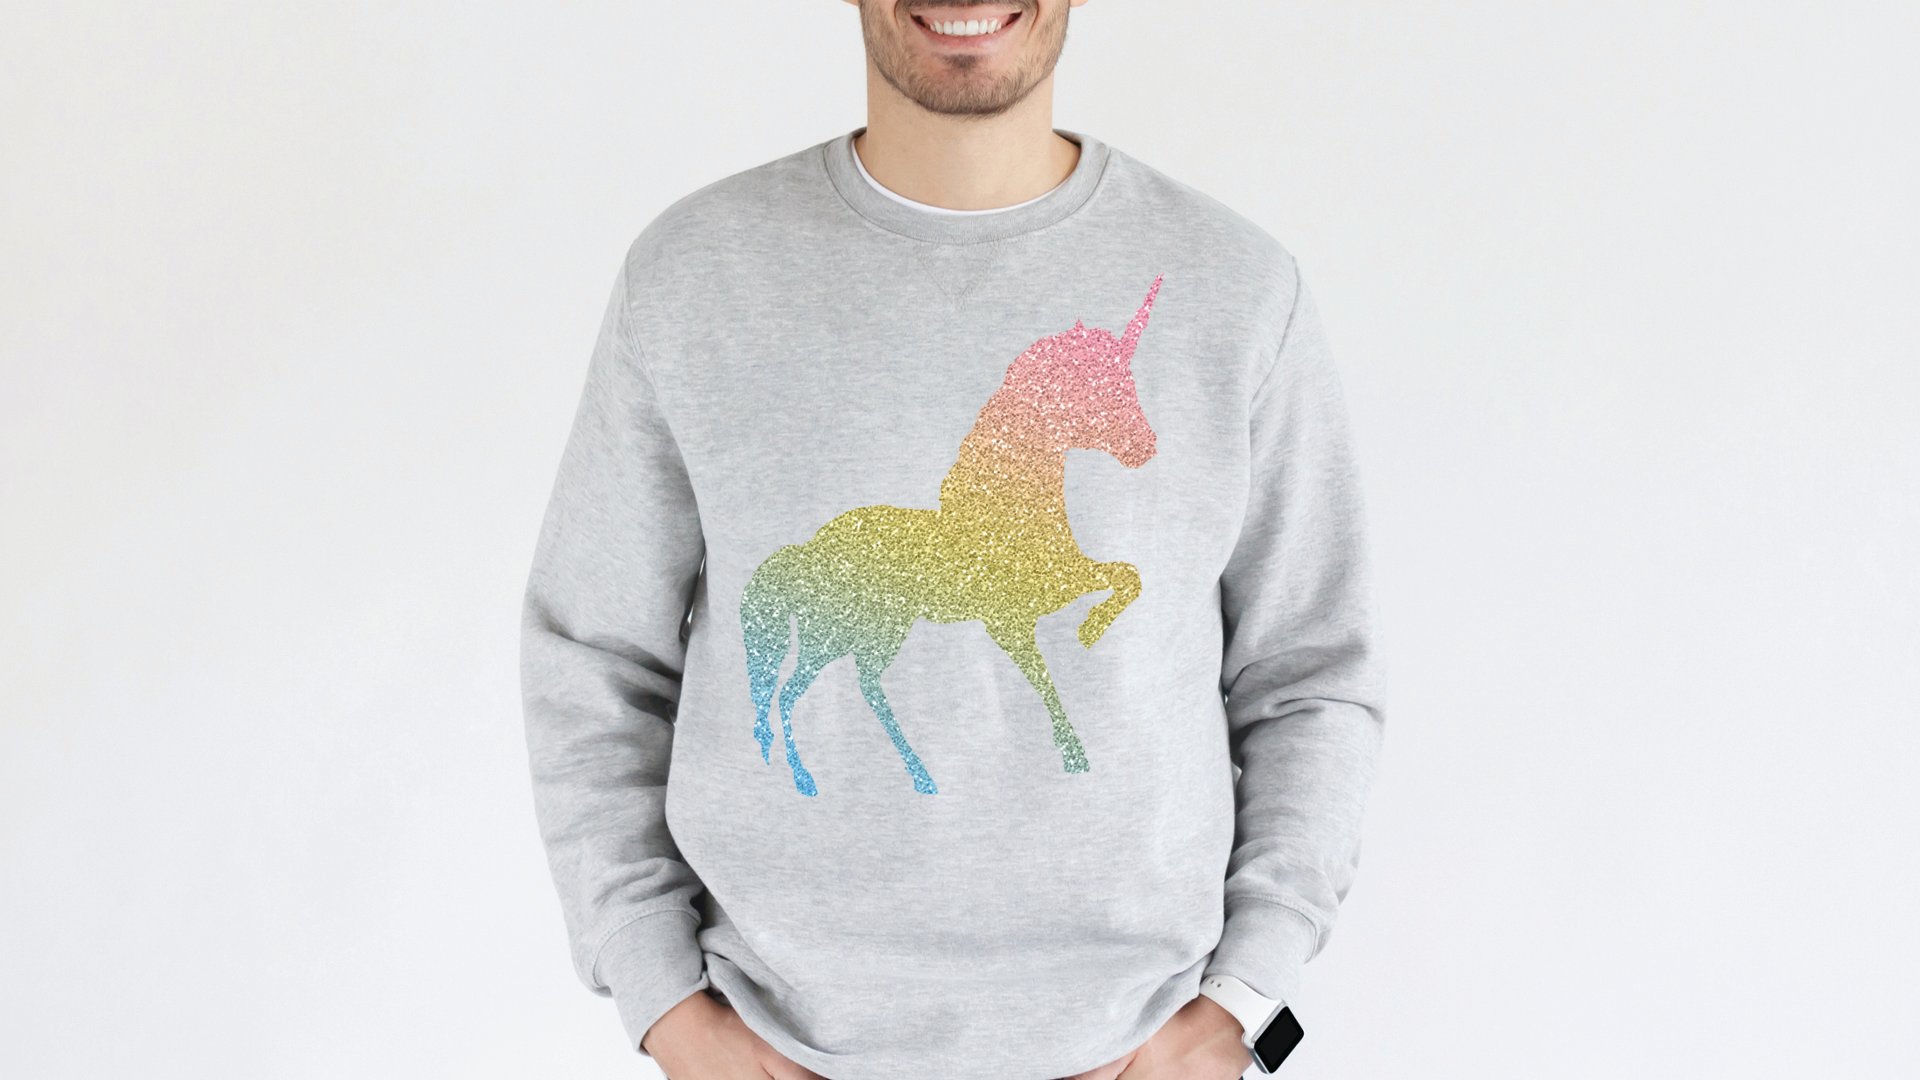 A sparkly unicorn sweatshirt